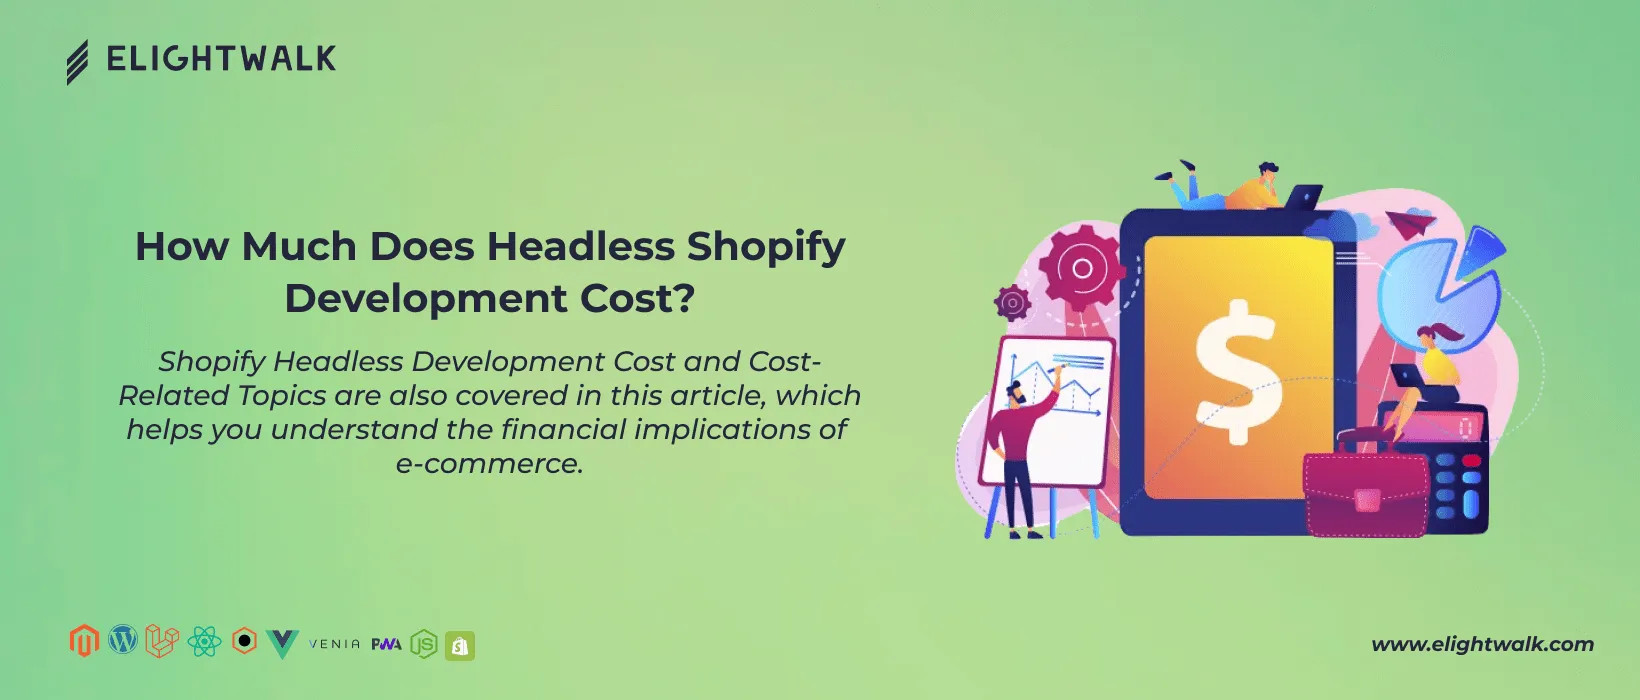 Headless shopify development cost